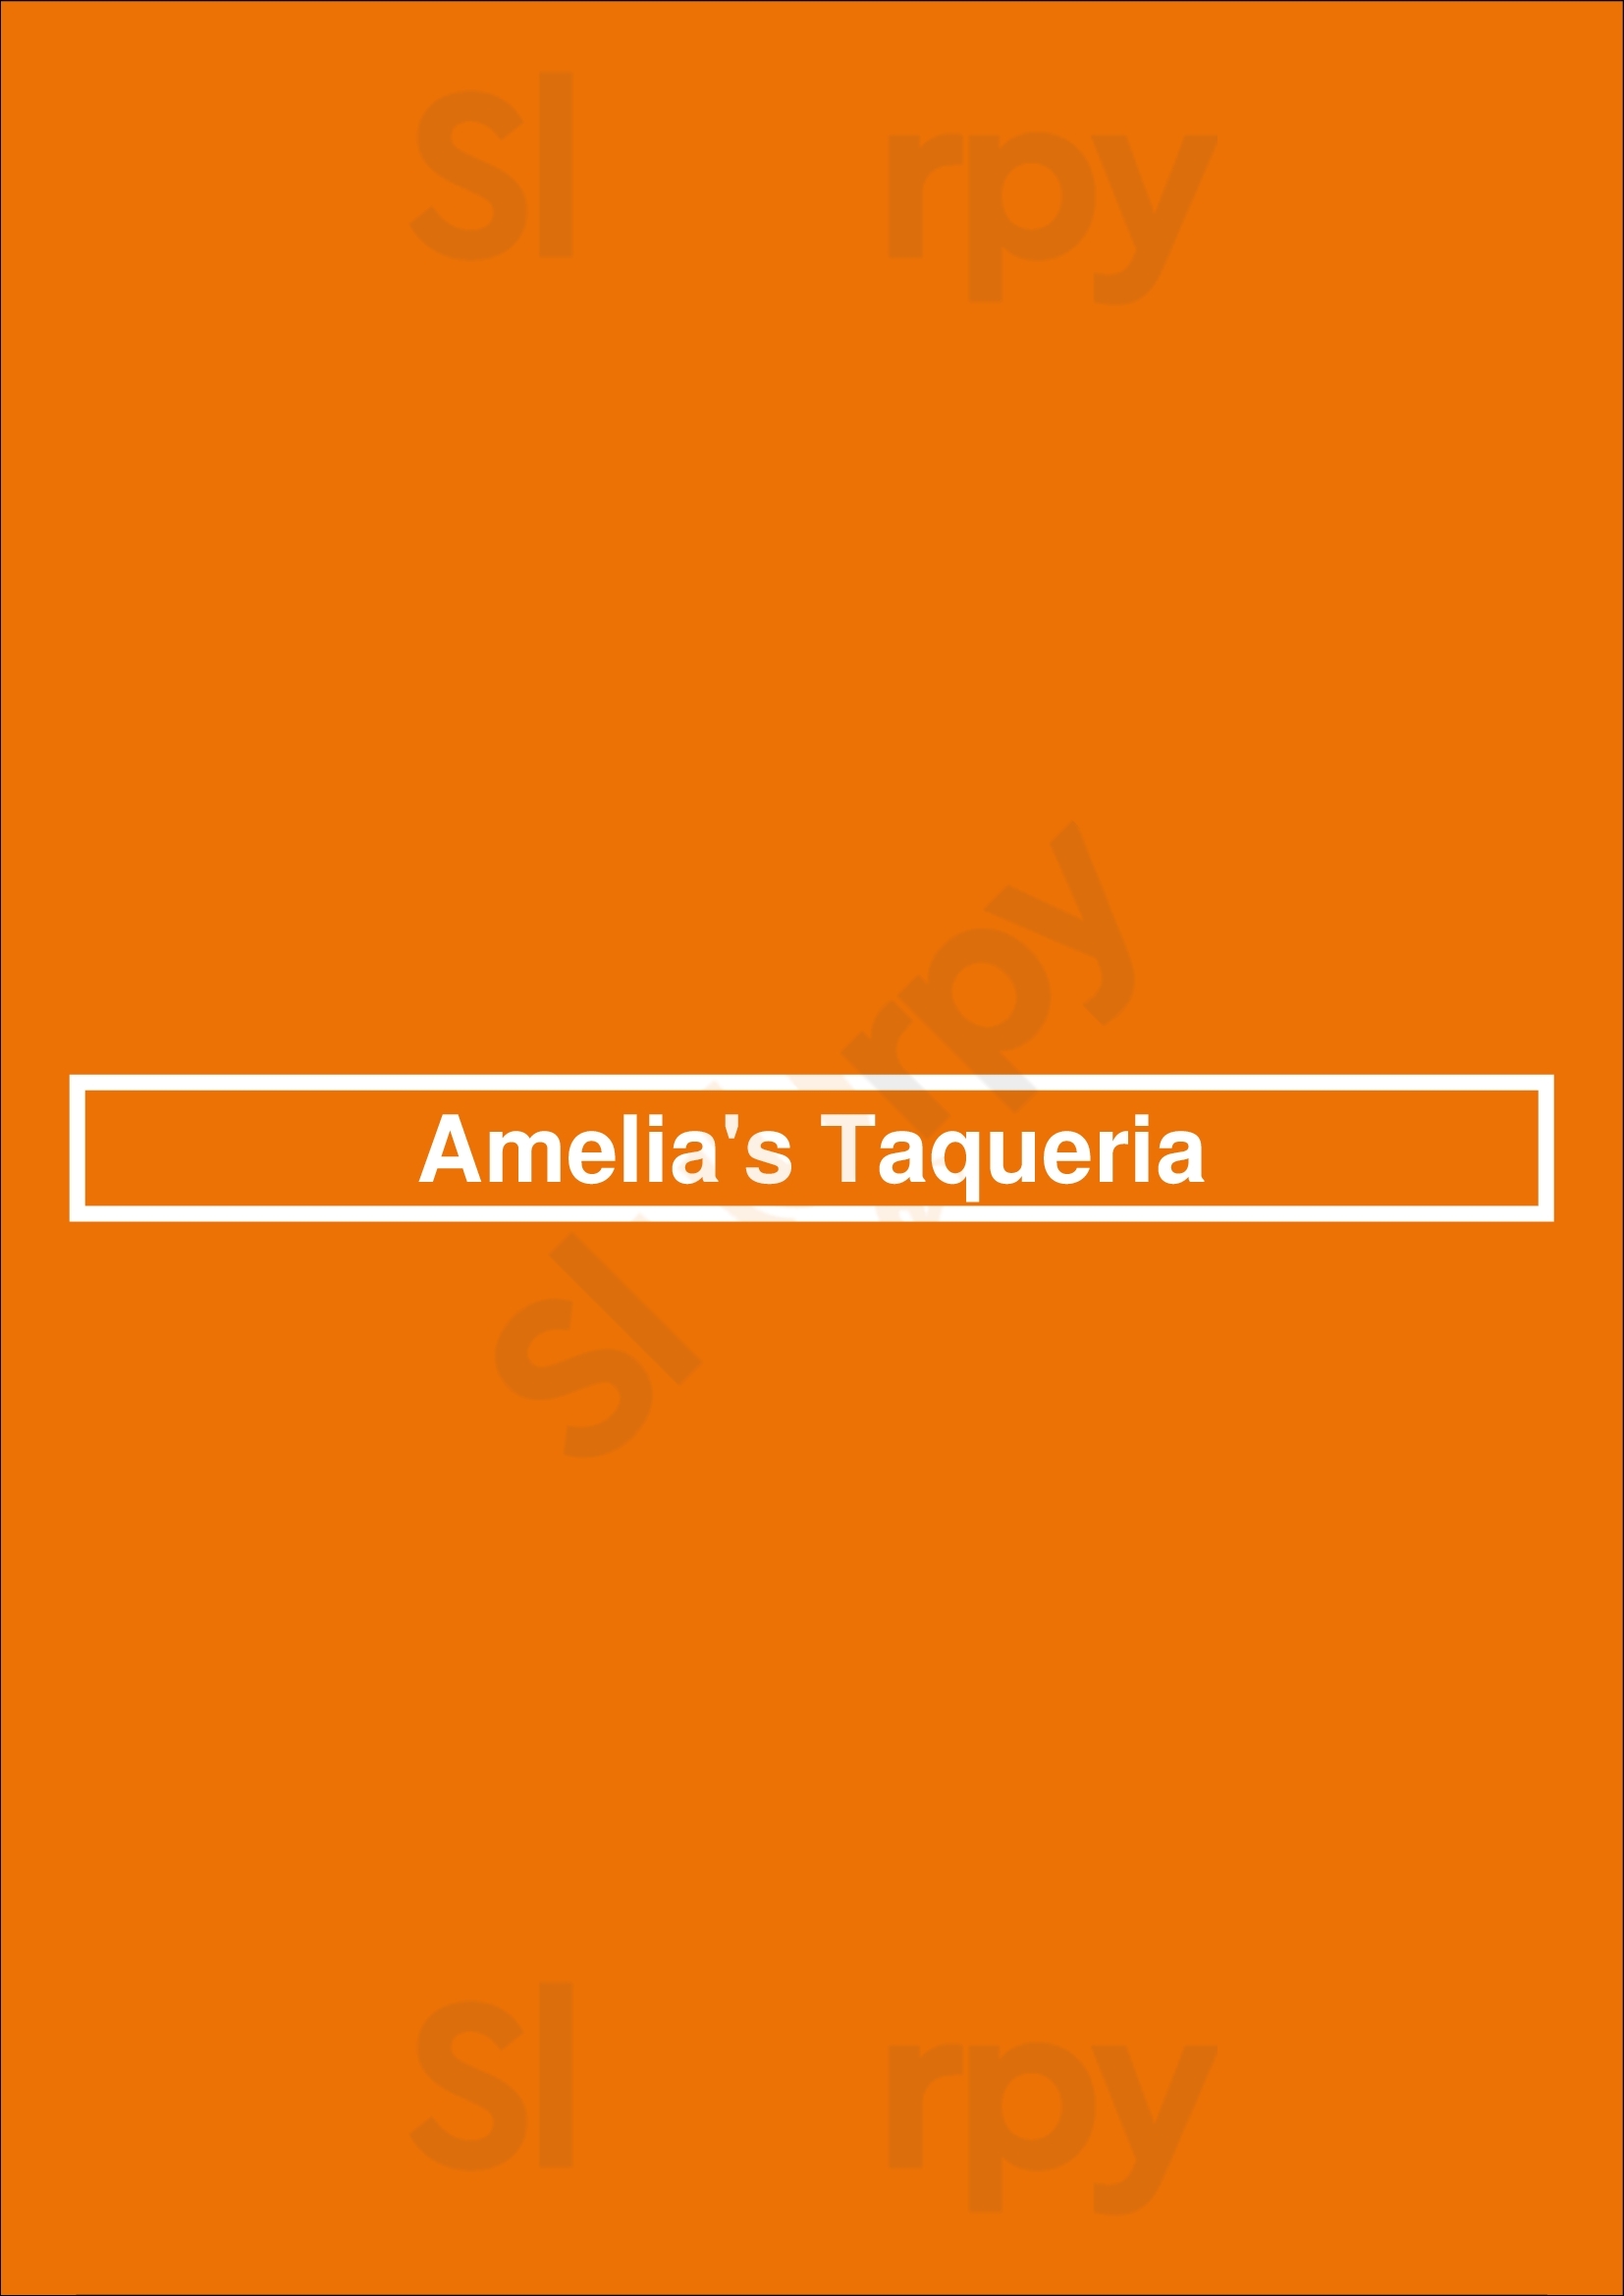 Amelia's Taqueria Boston Menu - 1